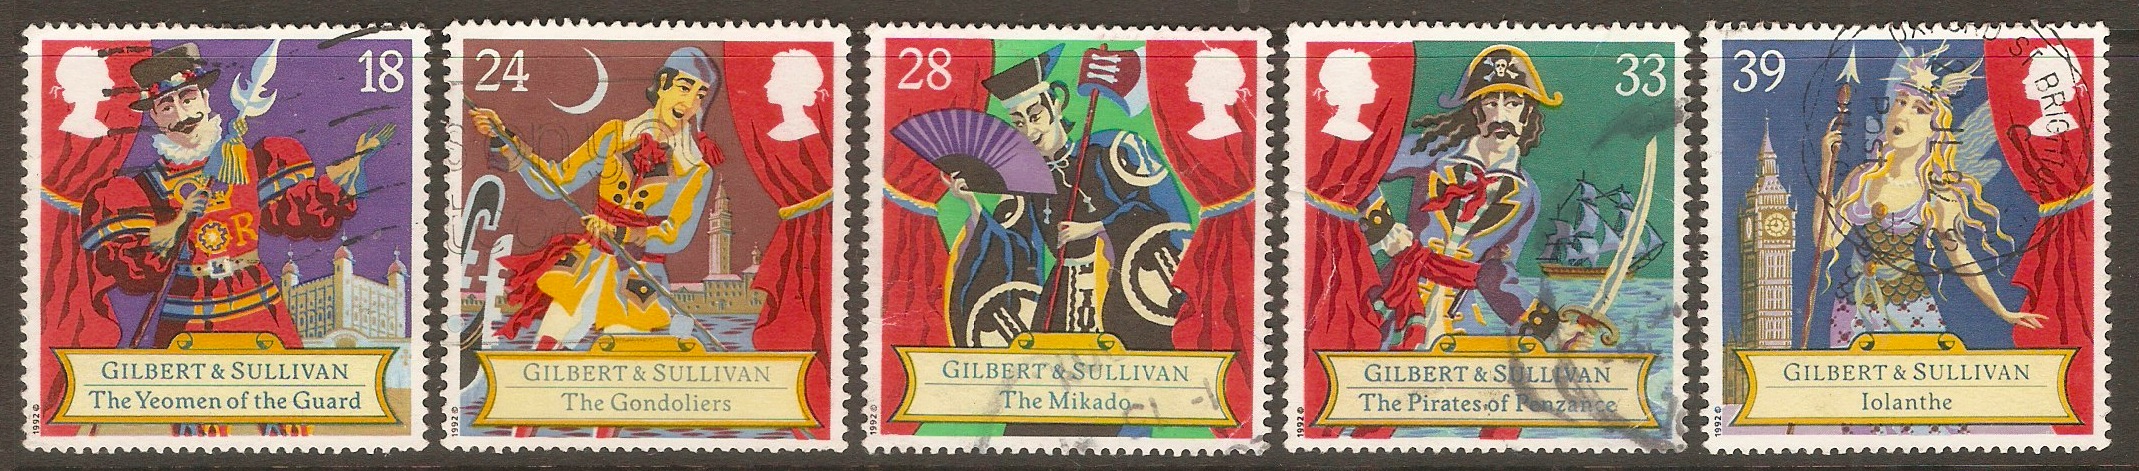 Great Britain 1992 Gilbert and Sullivan set. SG1624-SG1628.